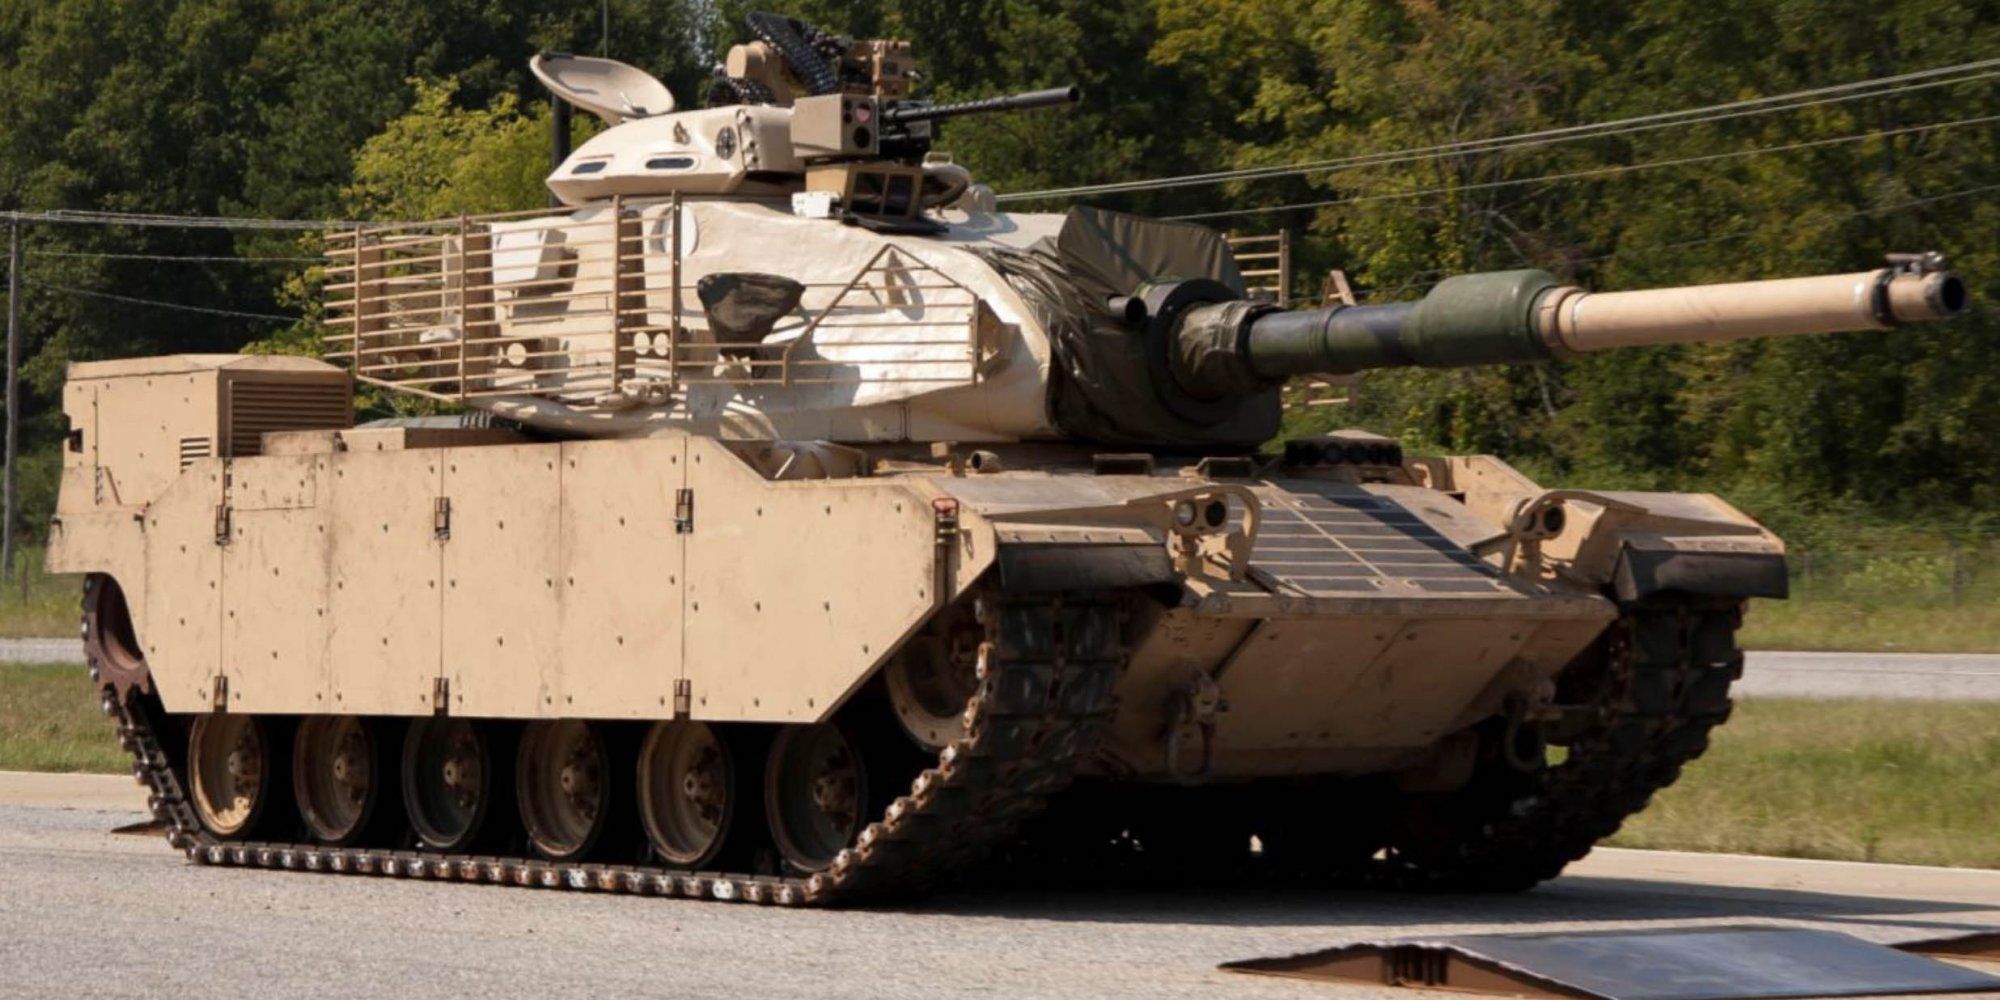 Ambt танк. M60 танк. Танк Паттон м60. М60 Амбт. M60 Blazer танк.